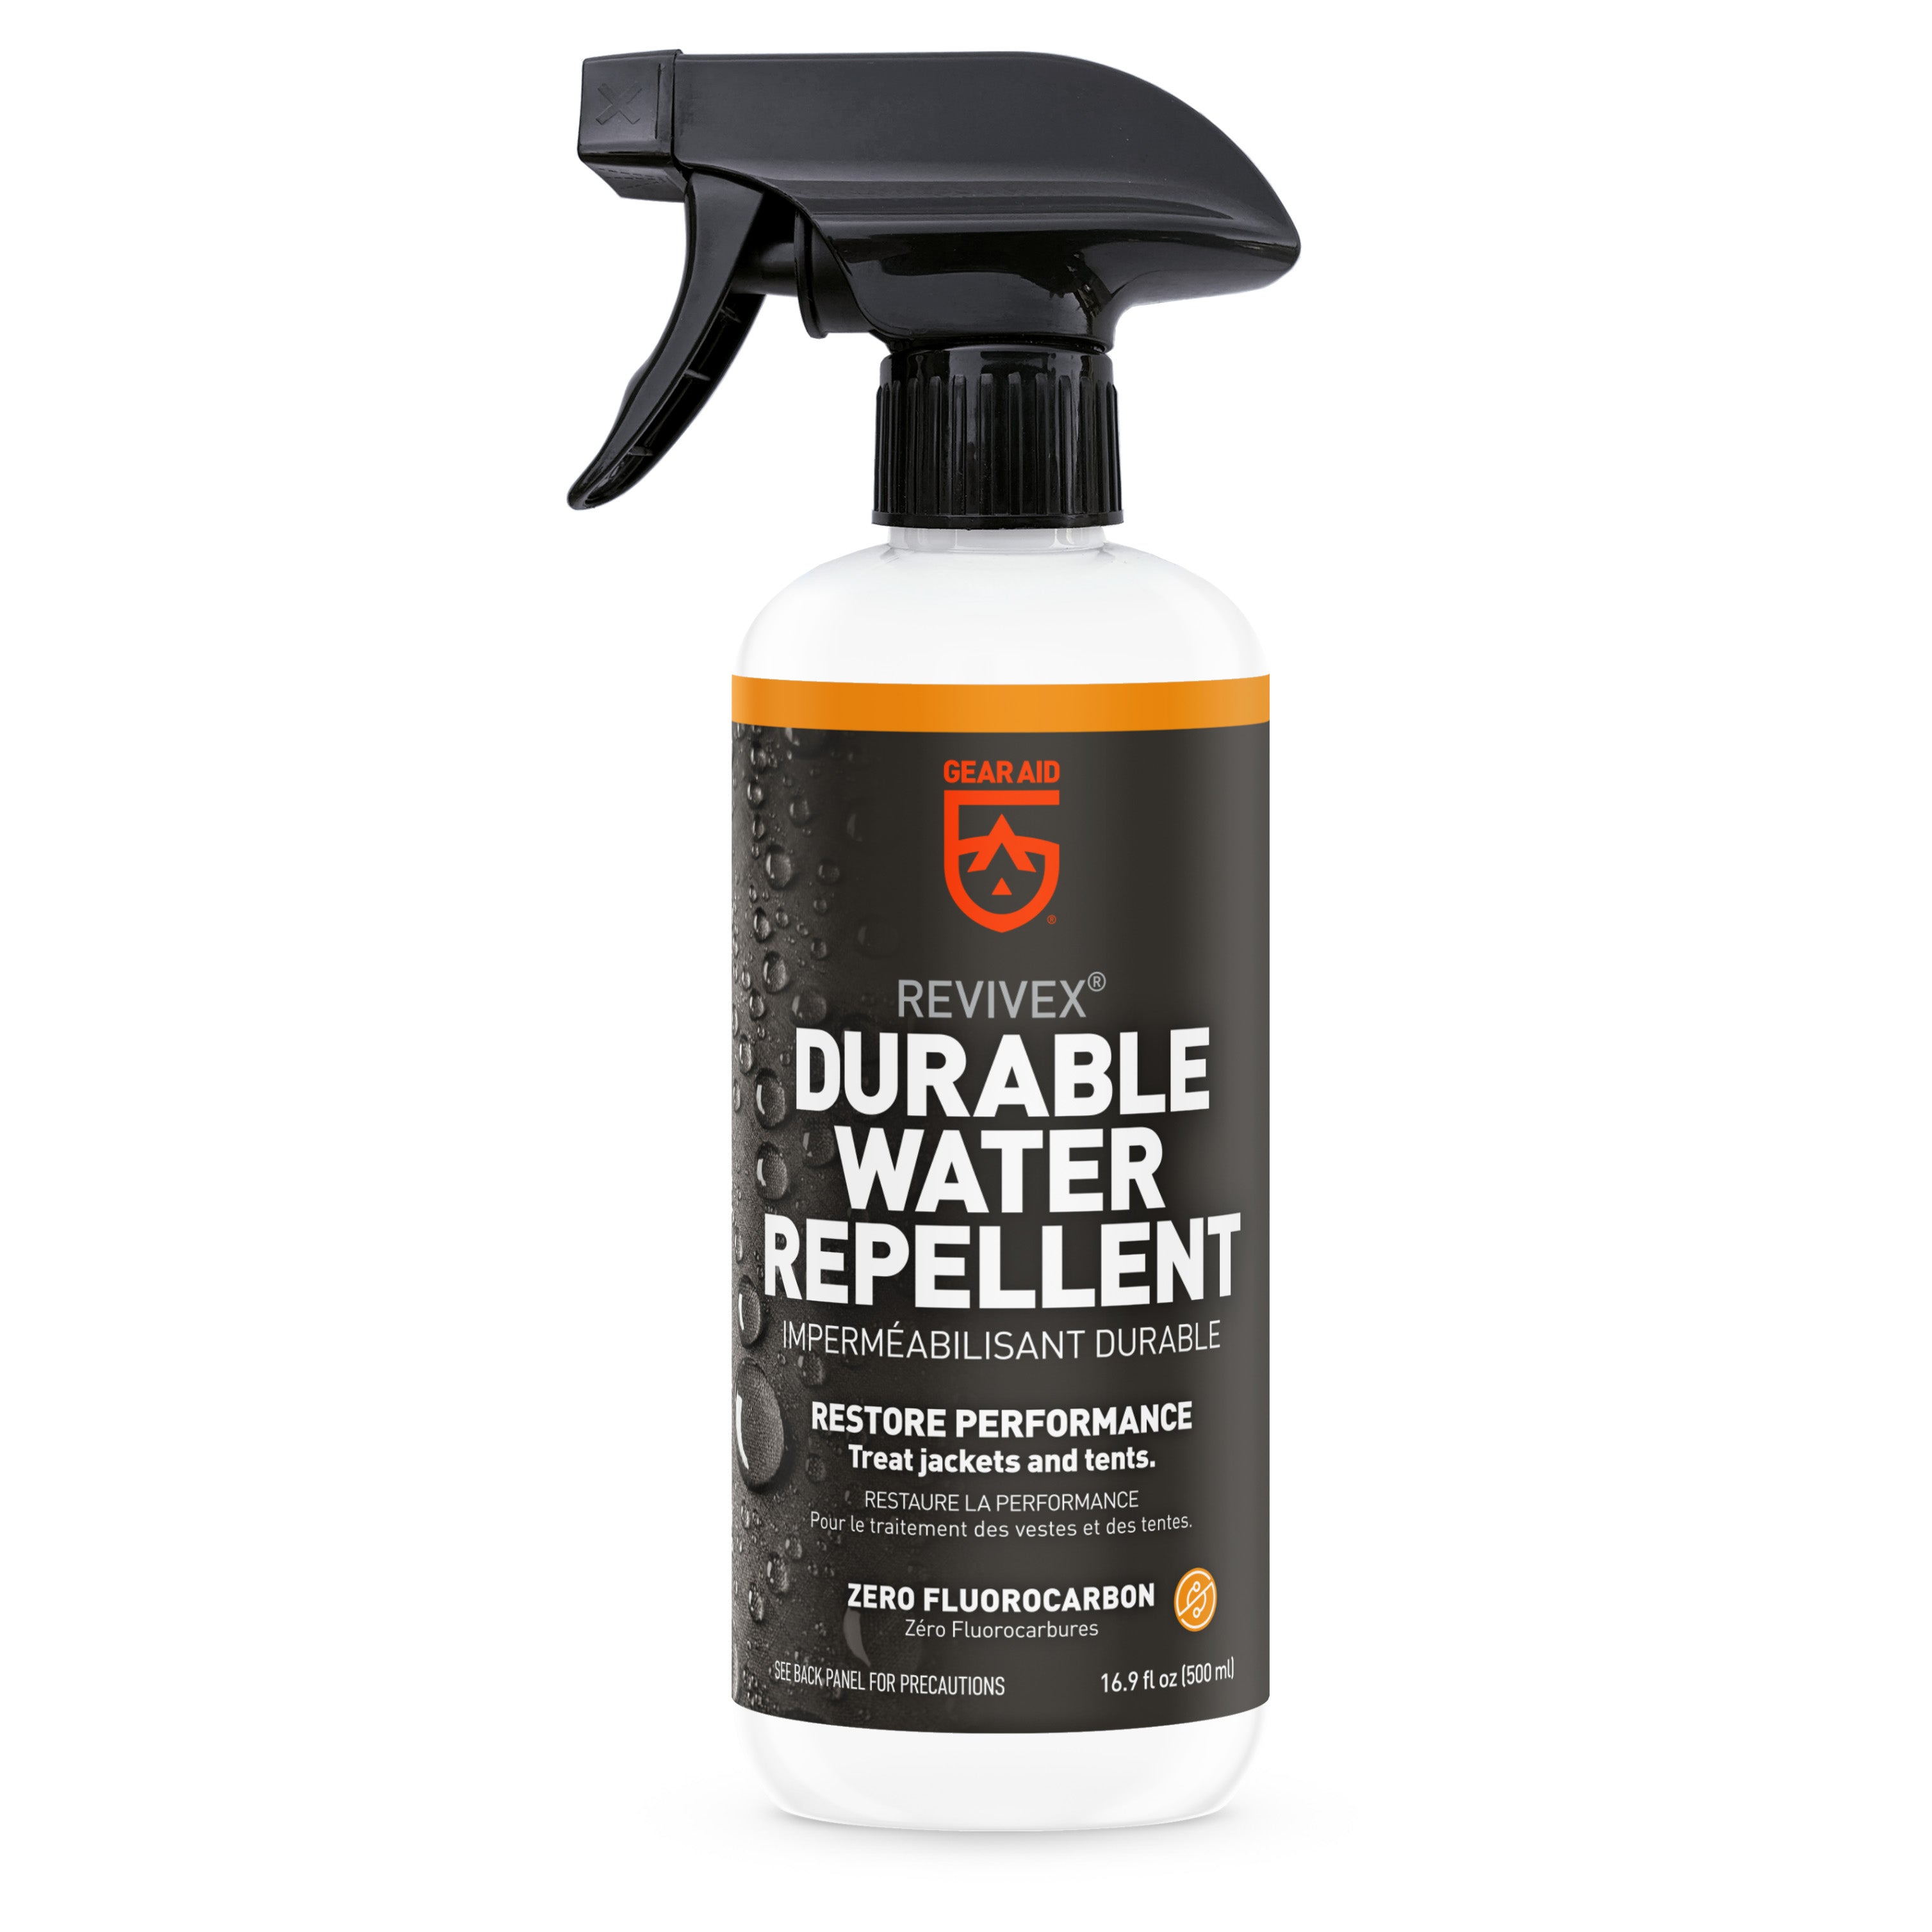 GEAR AID Revivex Durable Water Repellent